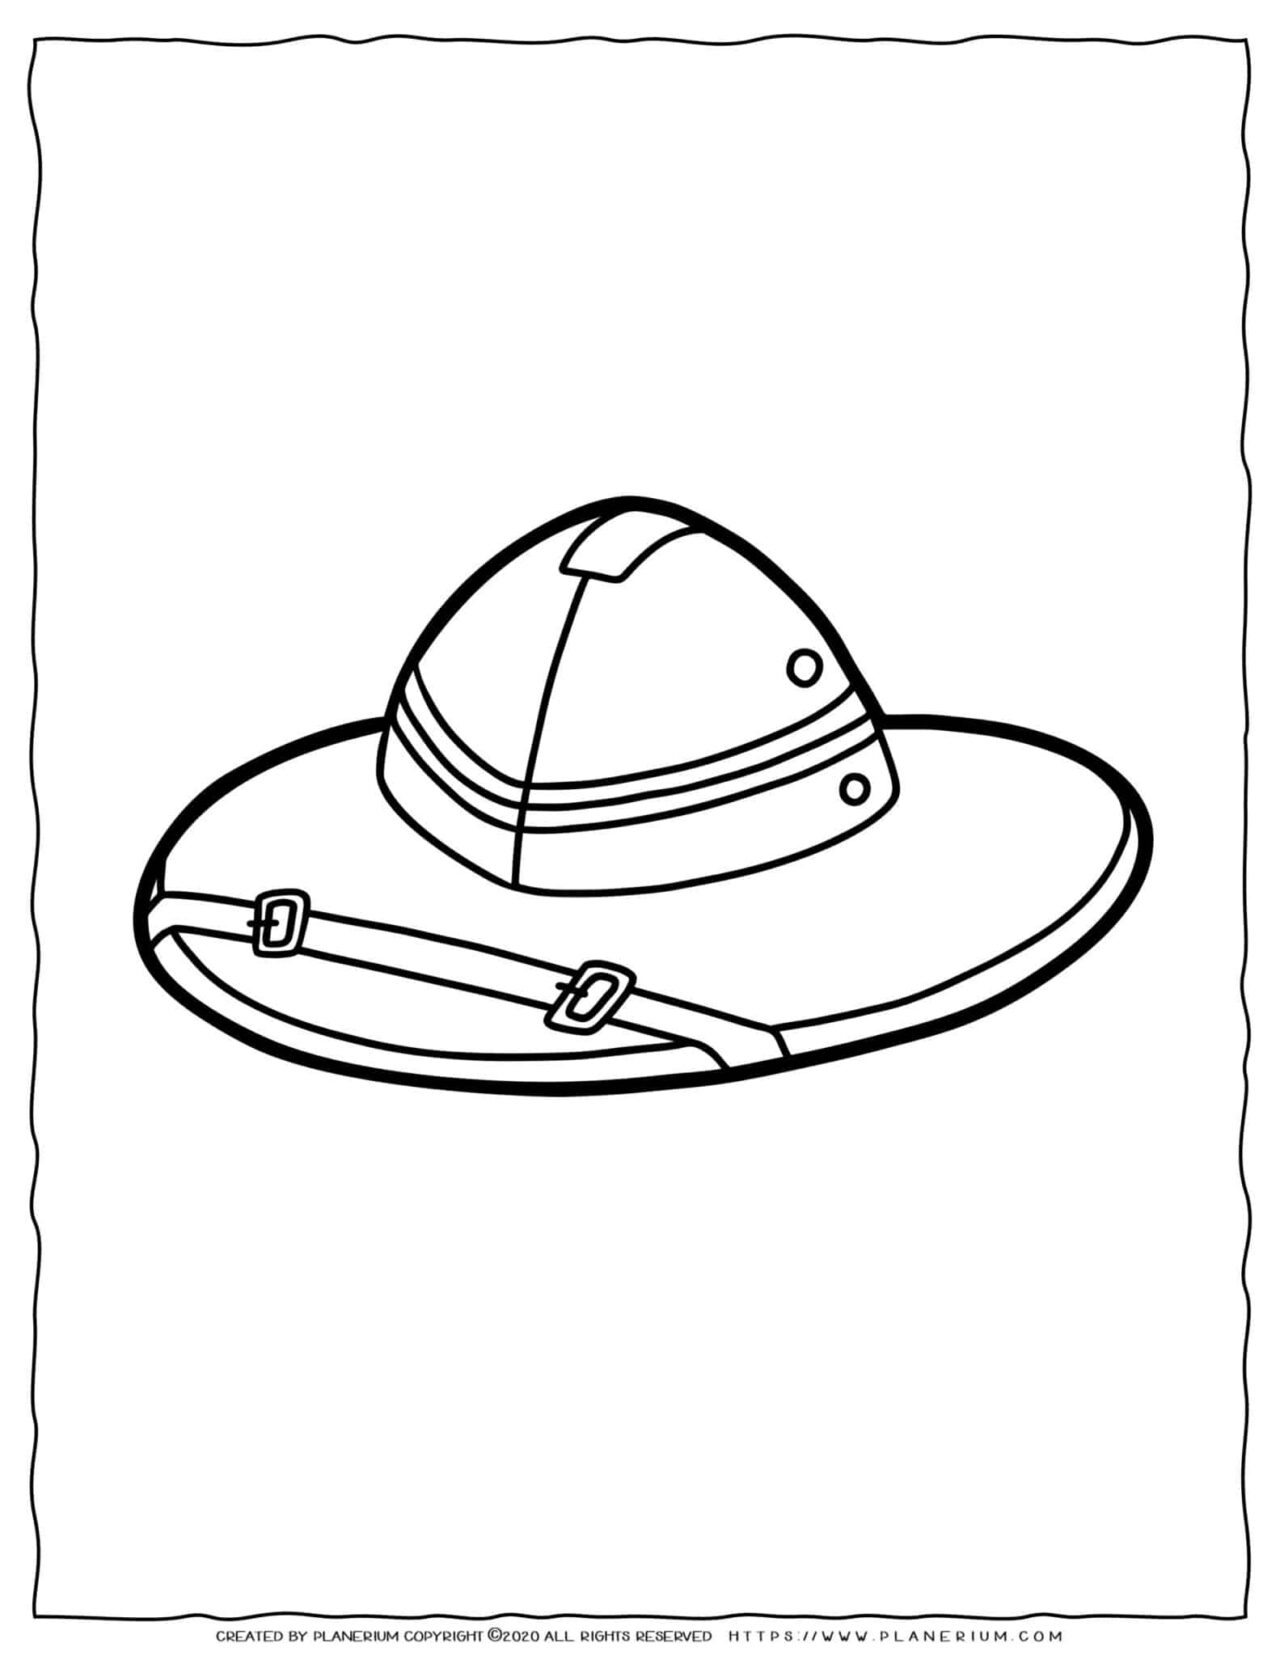 Clothes Coloring Page - Travel Hat | Planerium